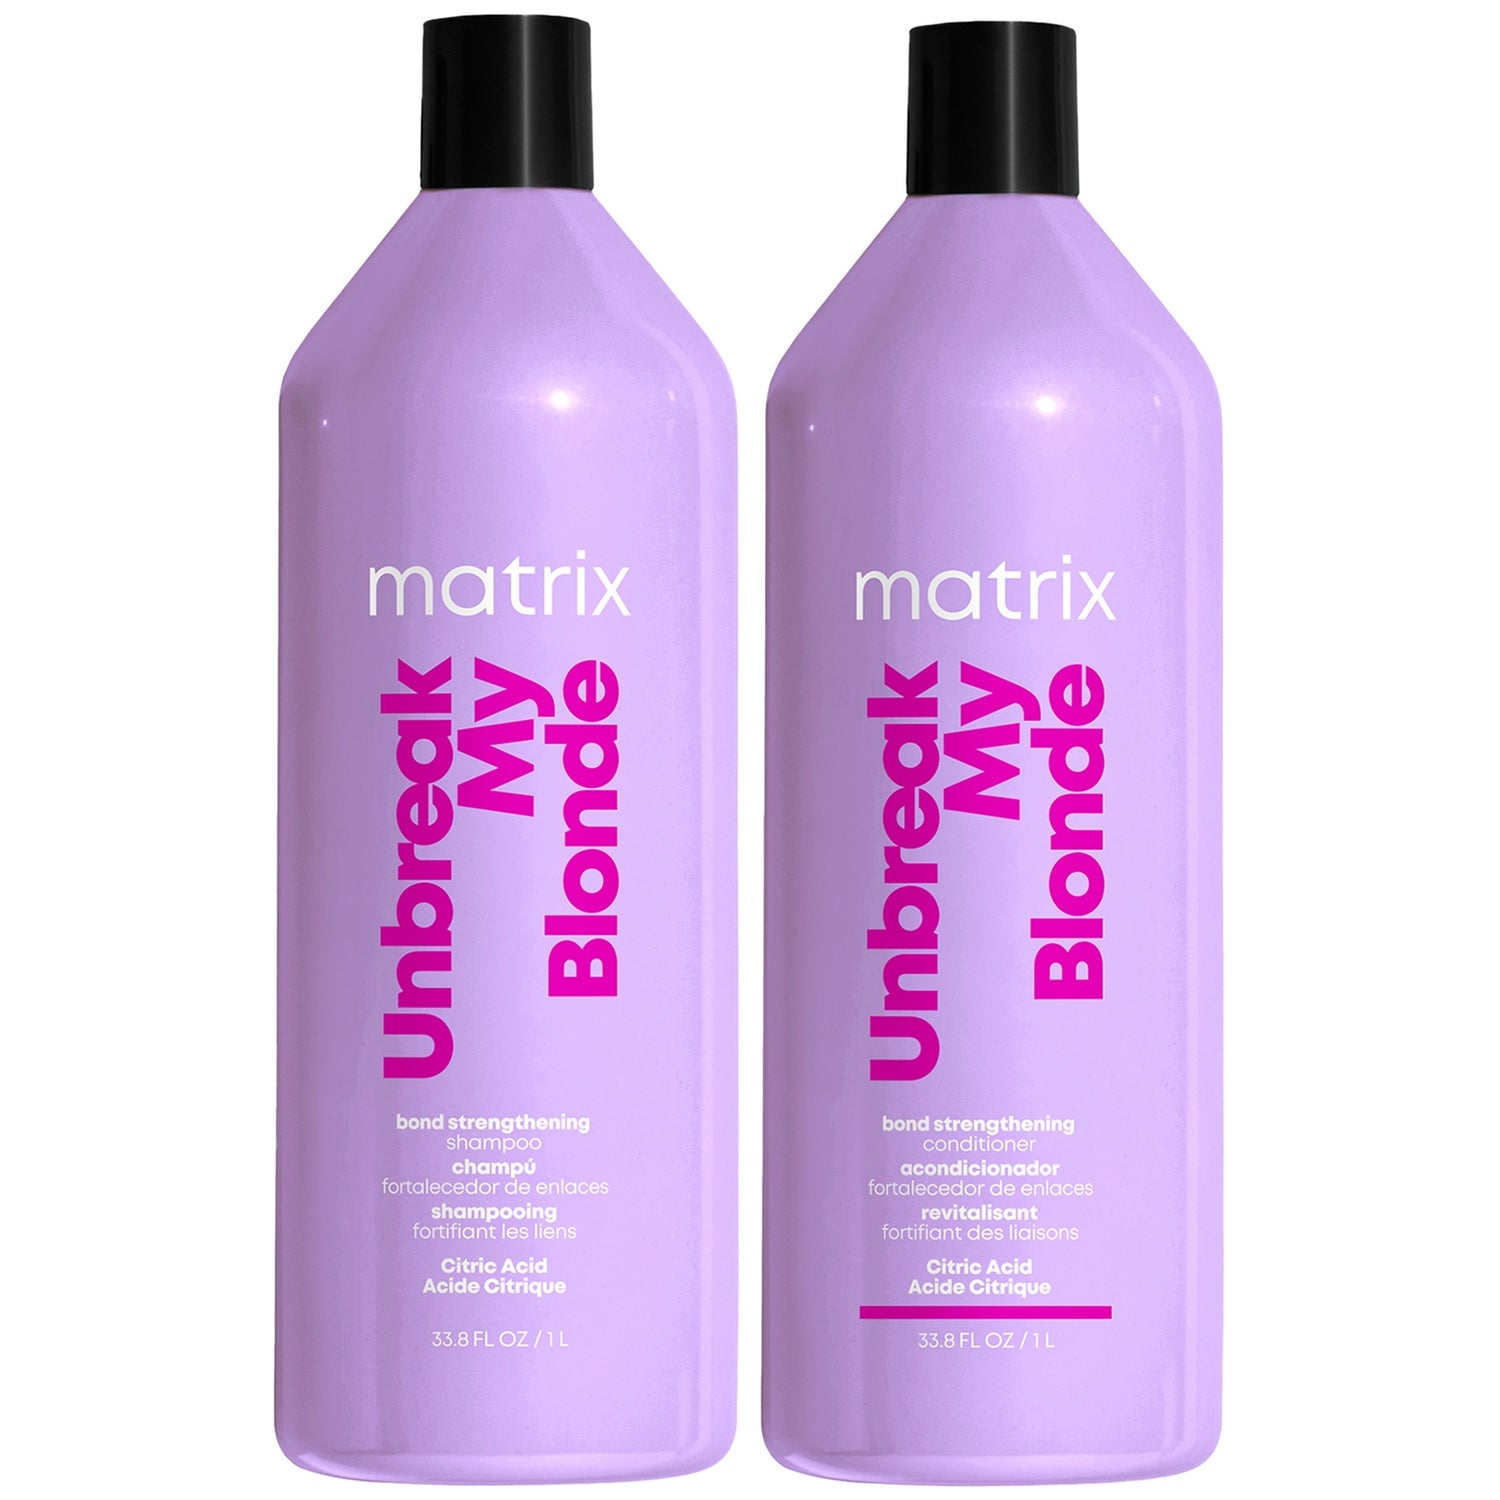 Matrix Total Results Unbreak My Blonde Schampo och balsam 1000 ml Duo